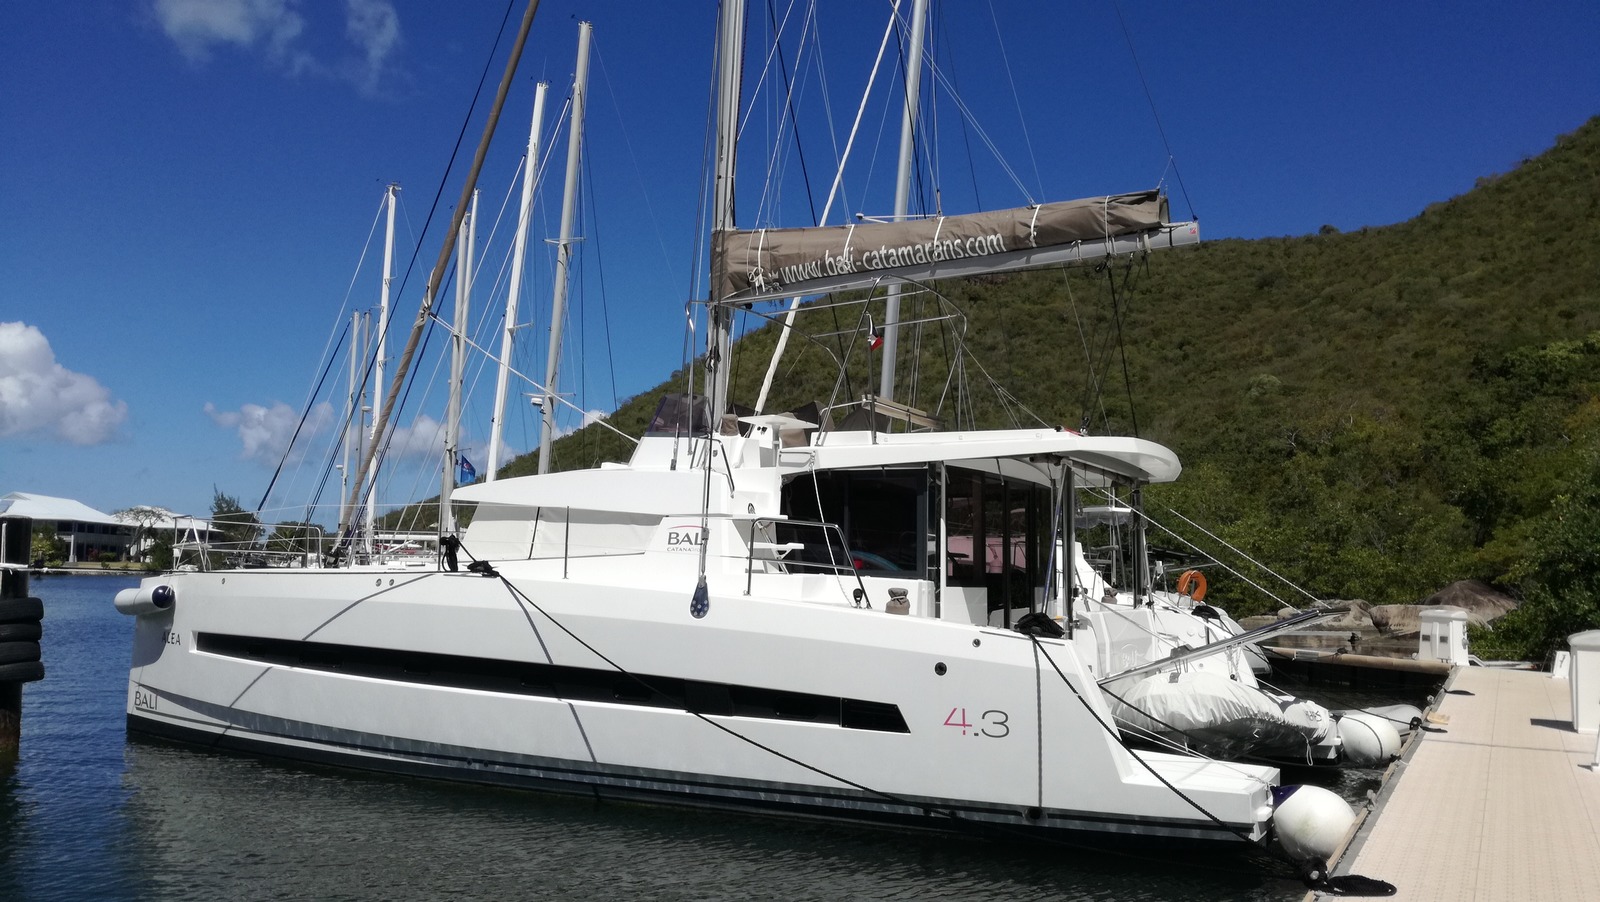 bali 43 catamaran for sale